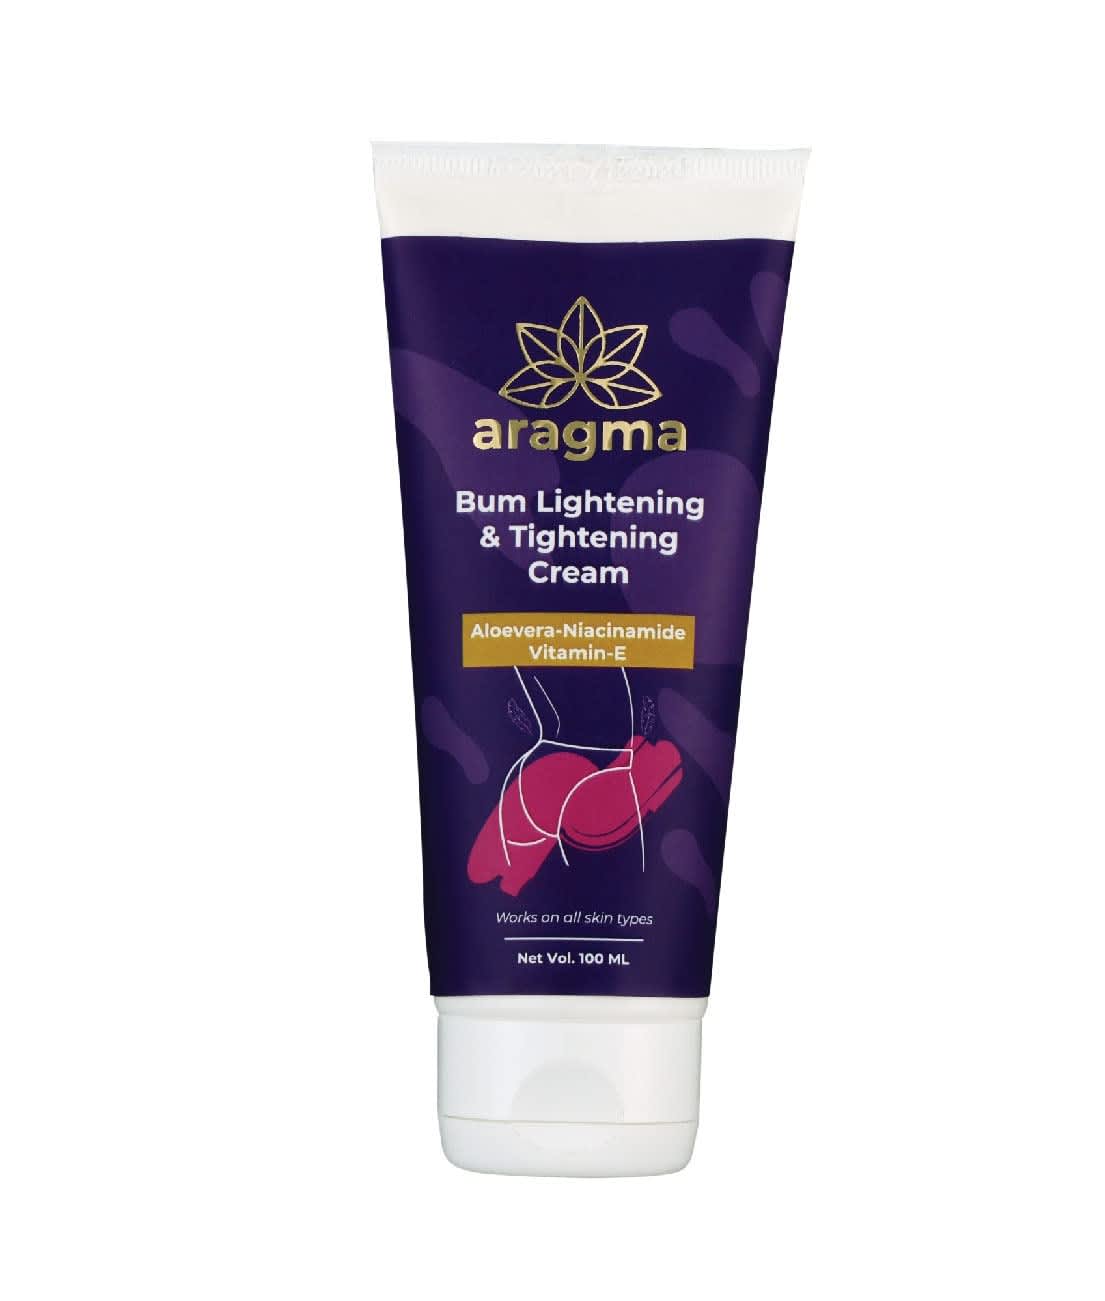 Aragma bum lightening and tightening cream with aloe vera niacinamide vitamin E 100ml